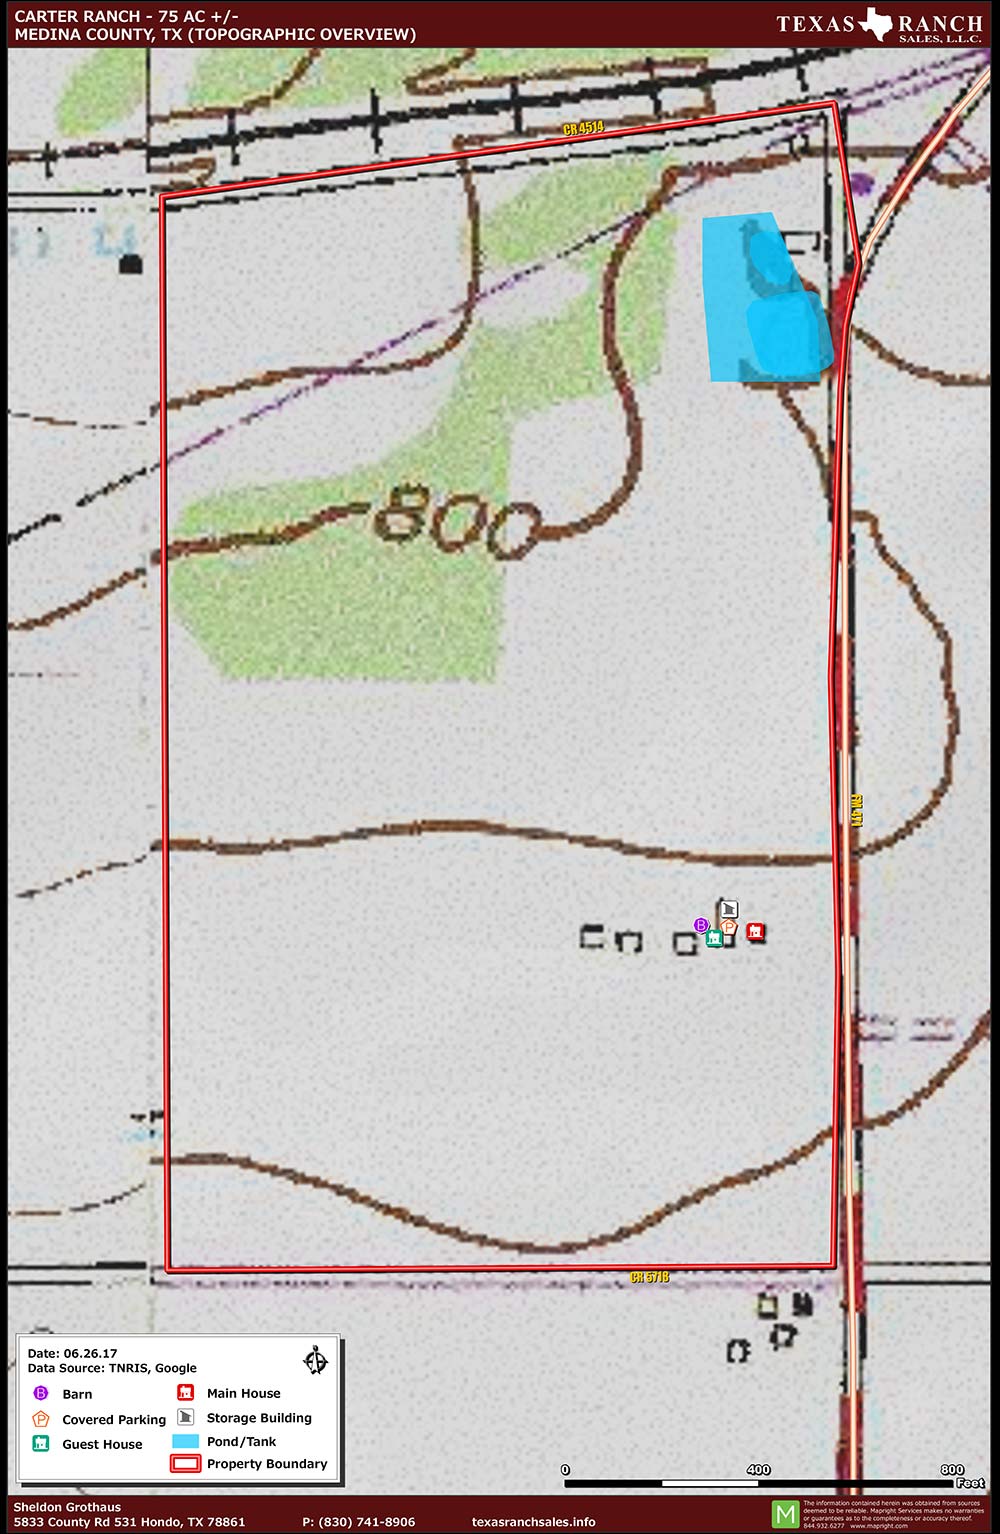 75 Acre Ranch Medina Topography Map